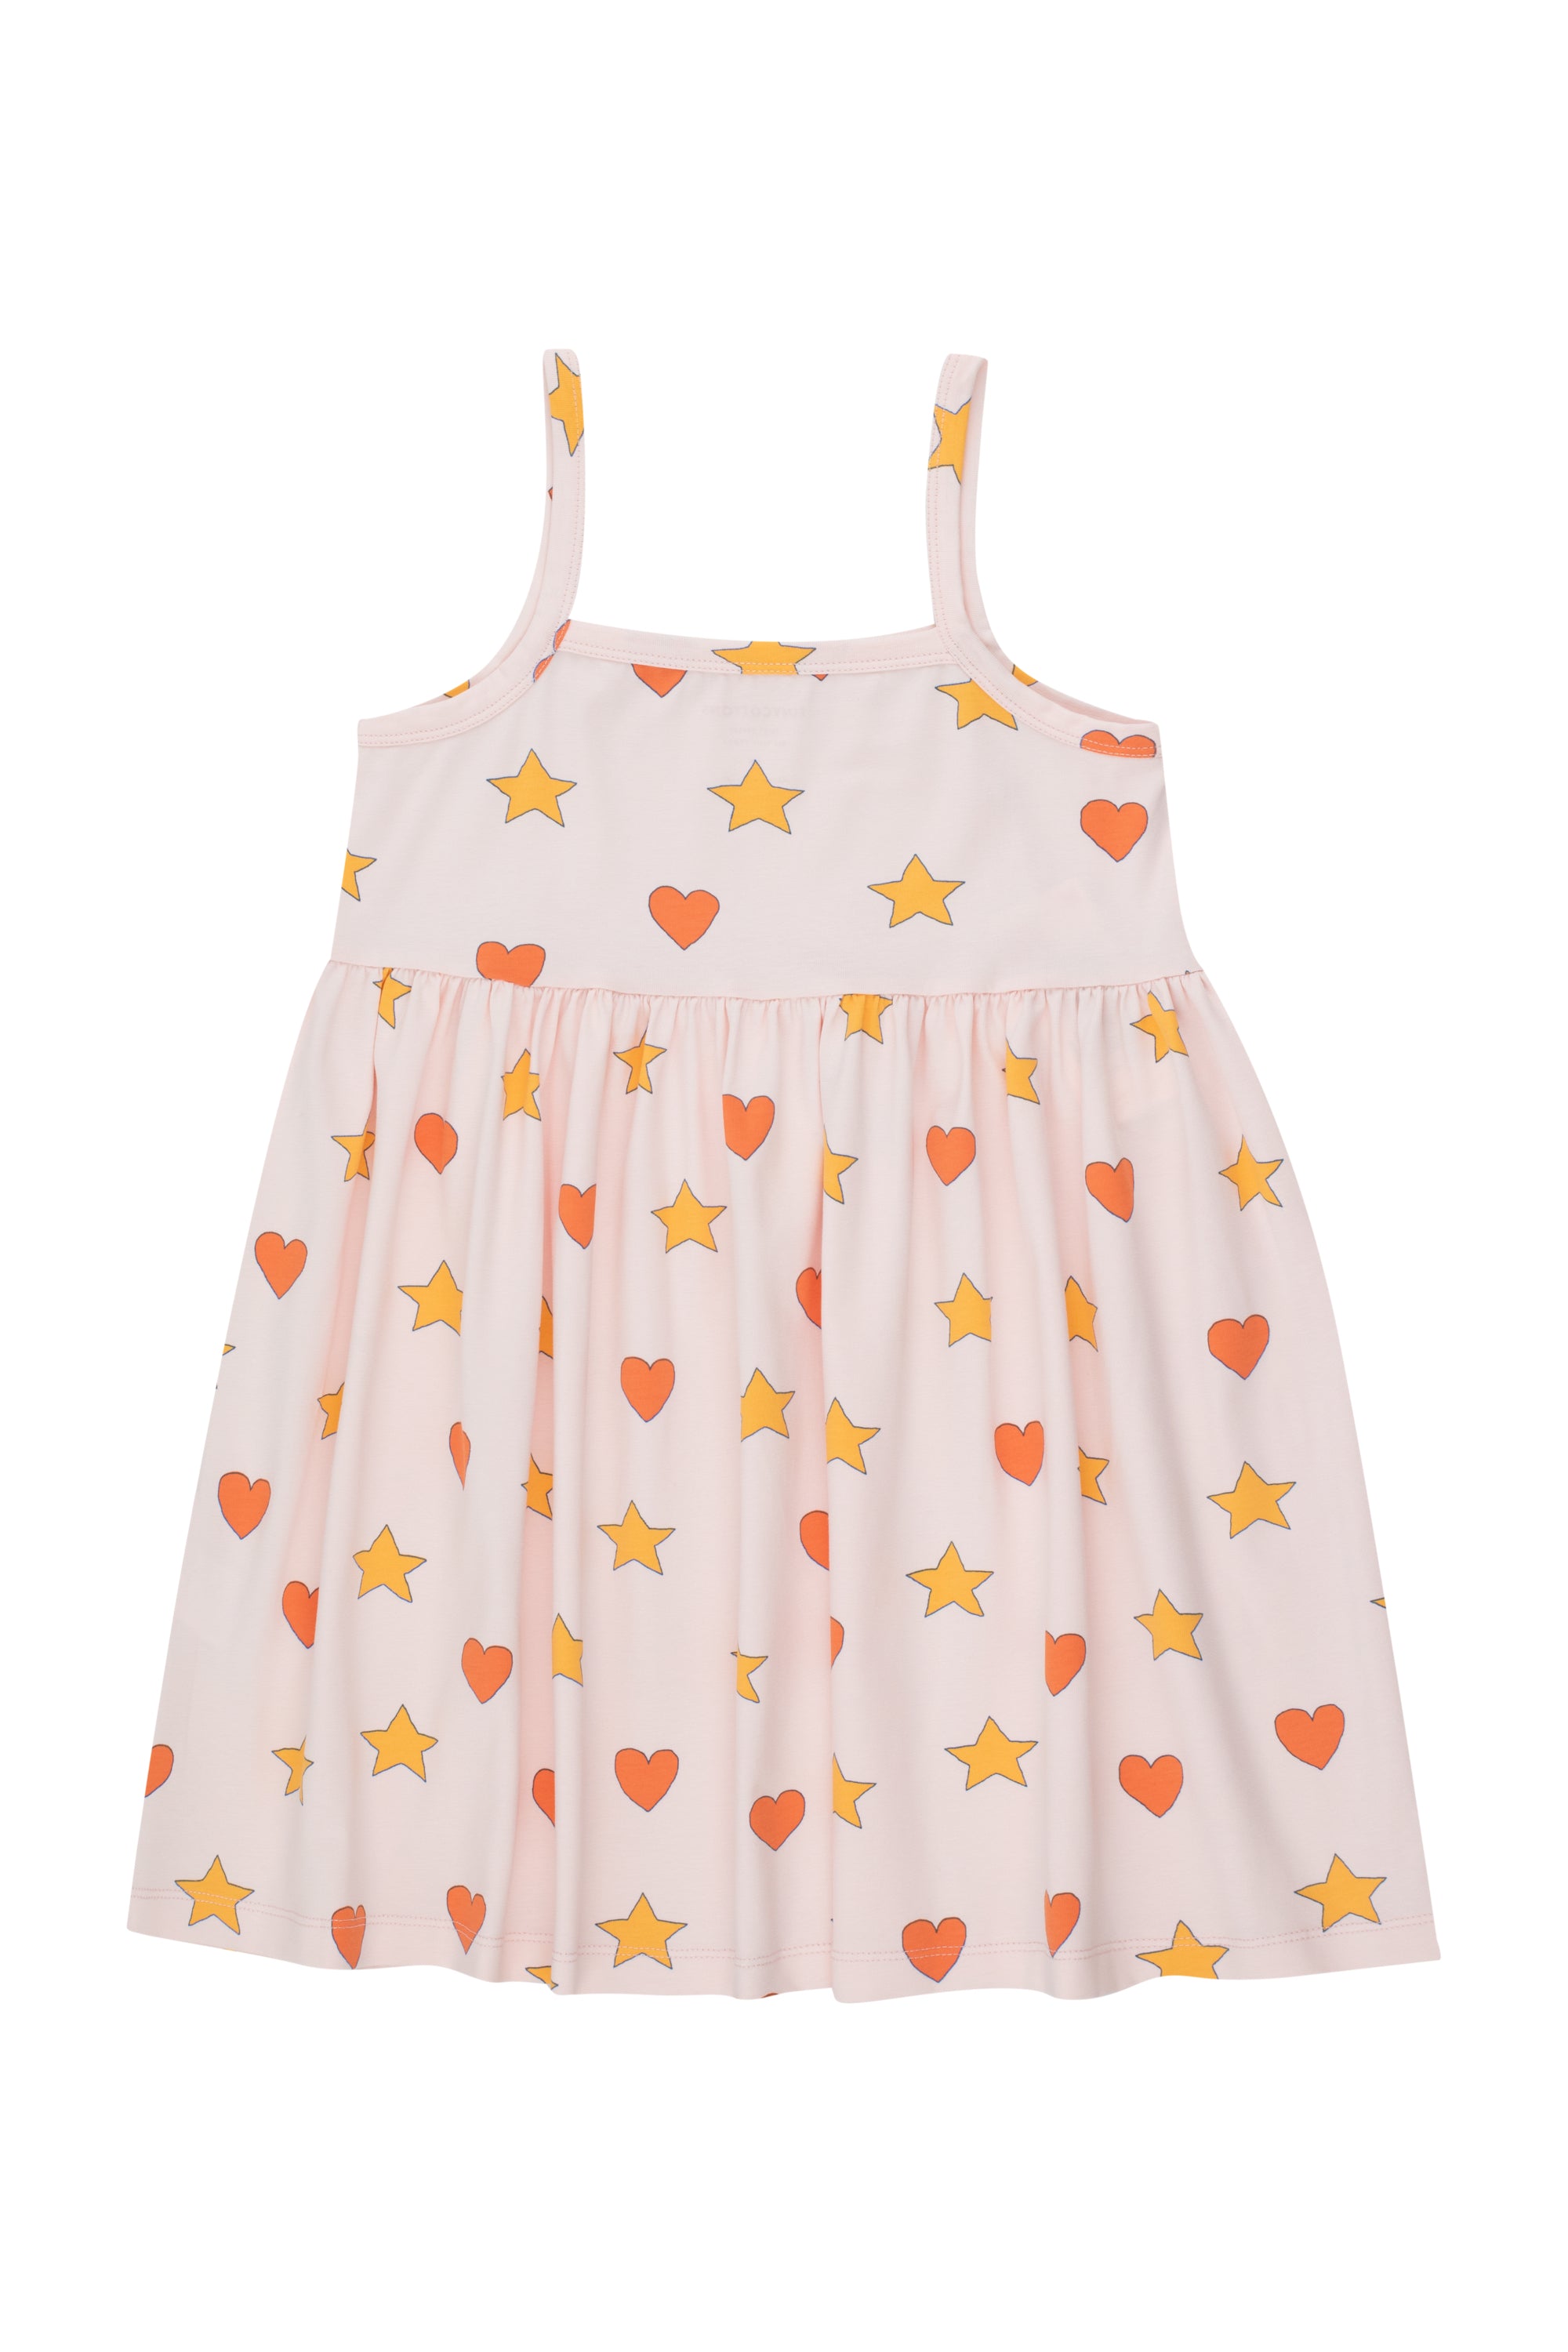 TinyCottons Hearts Stars Dress